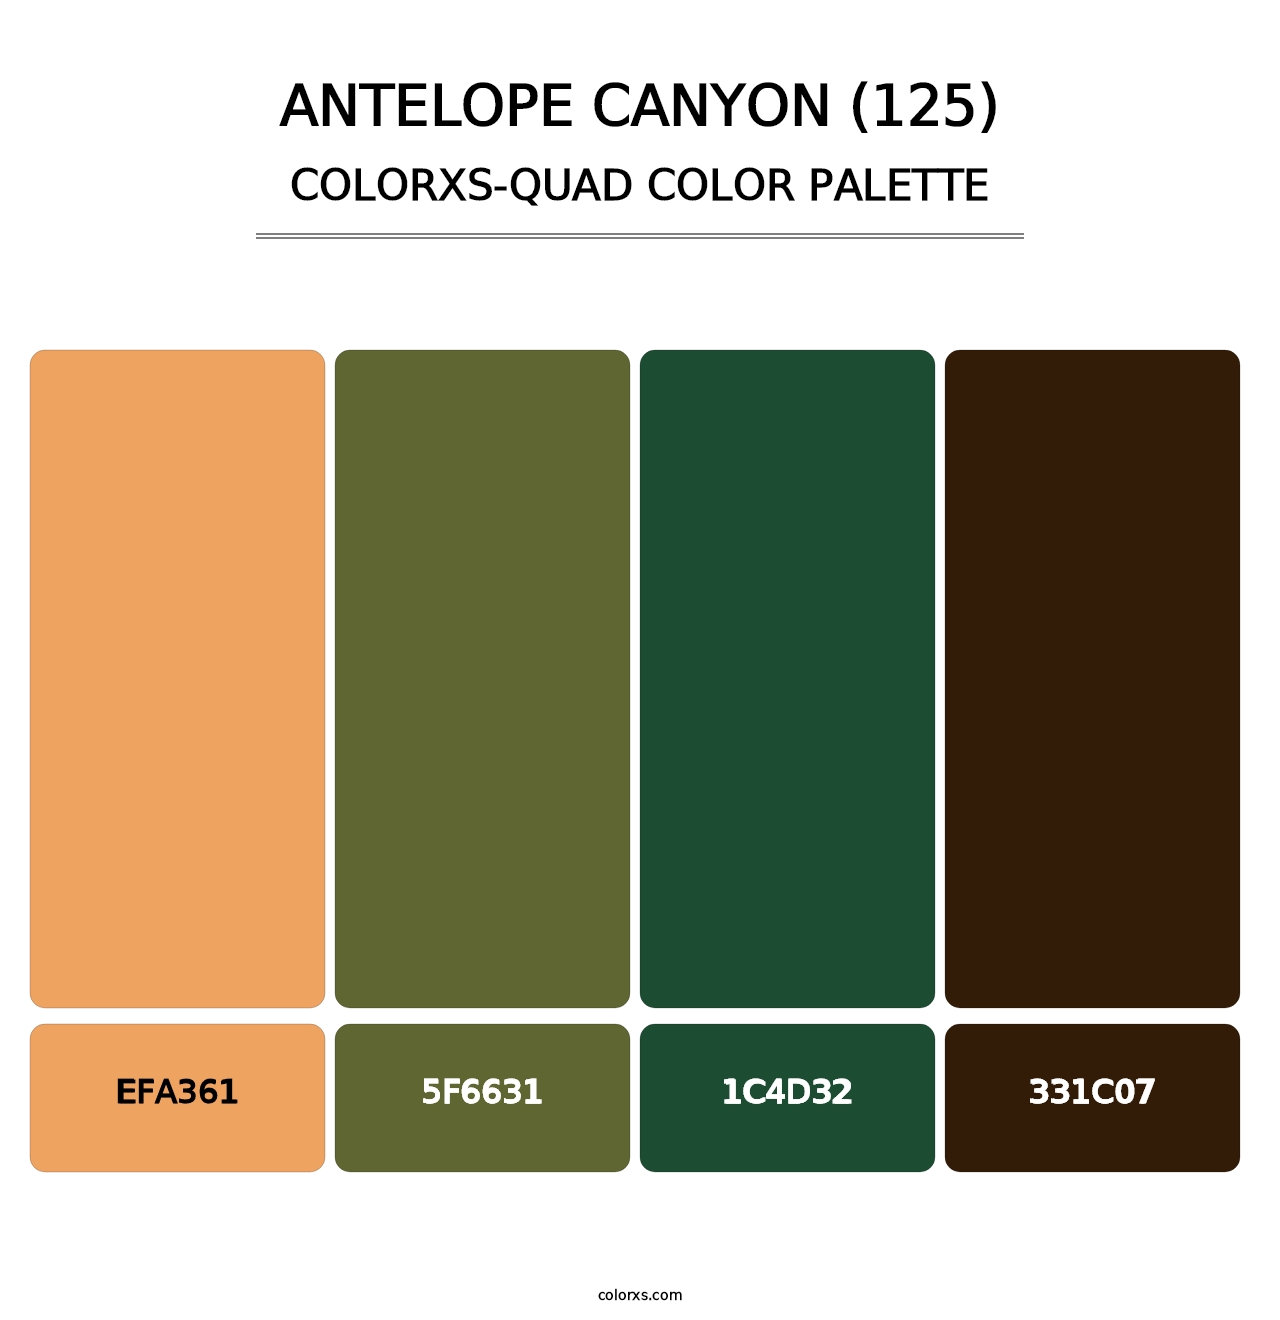 Antelope Canyon (125) - Colorxs Quad Palette